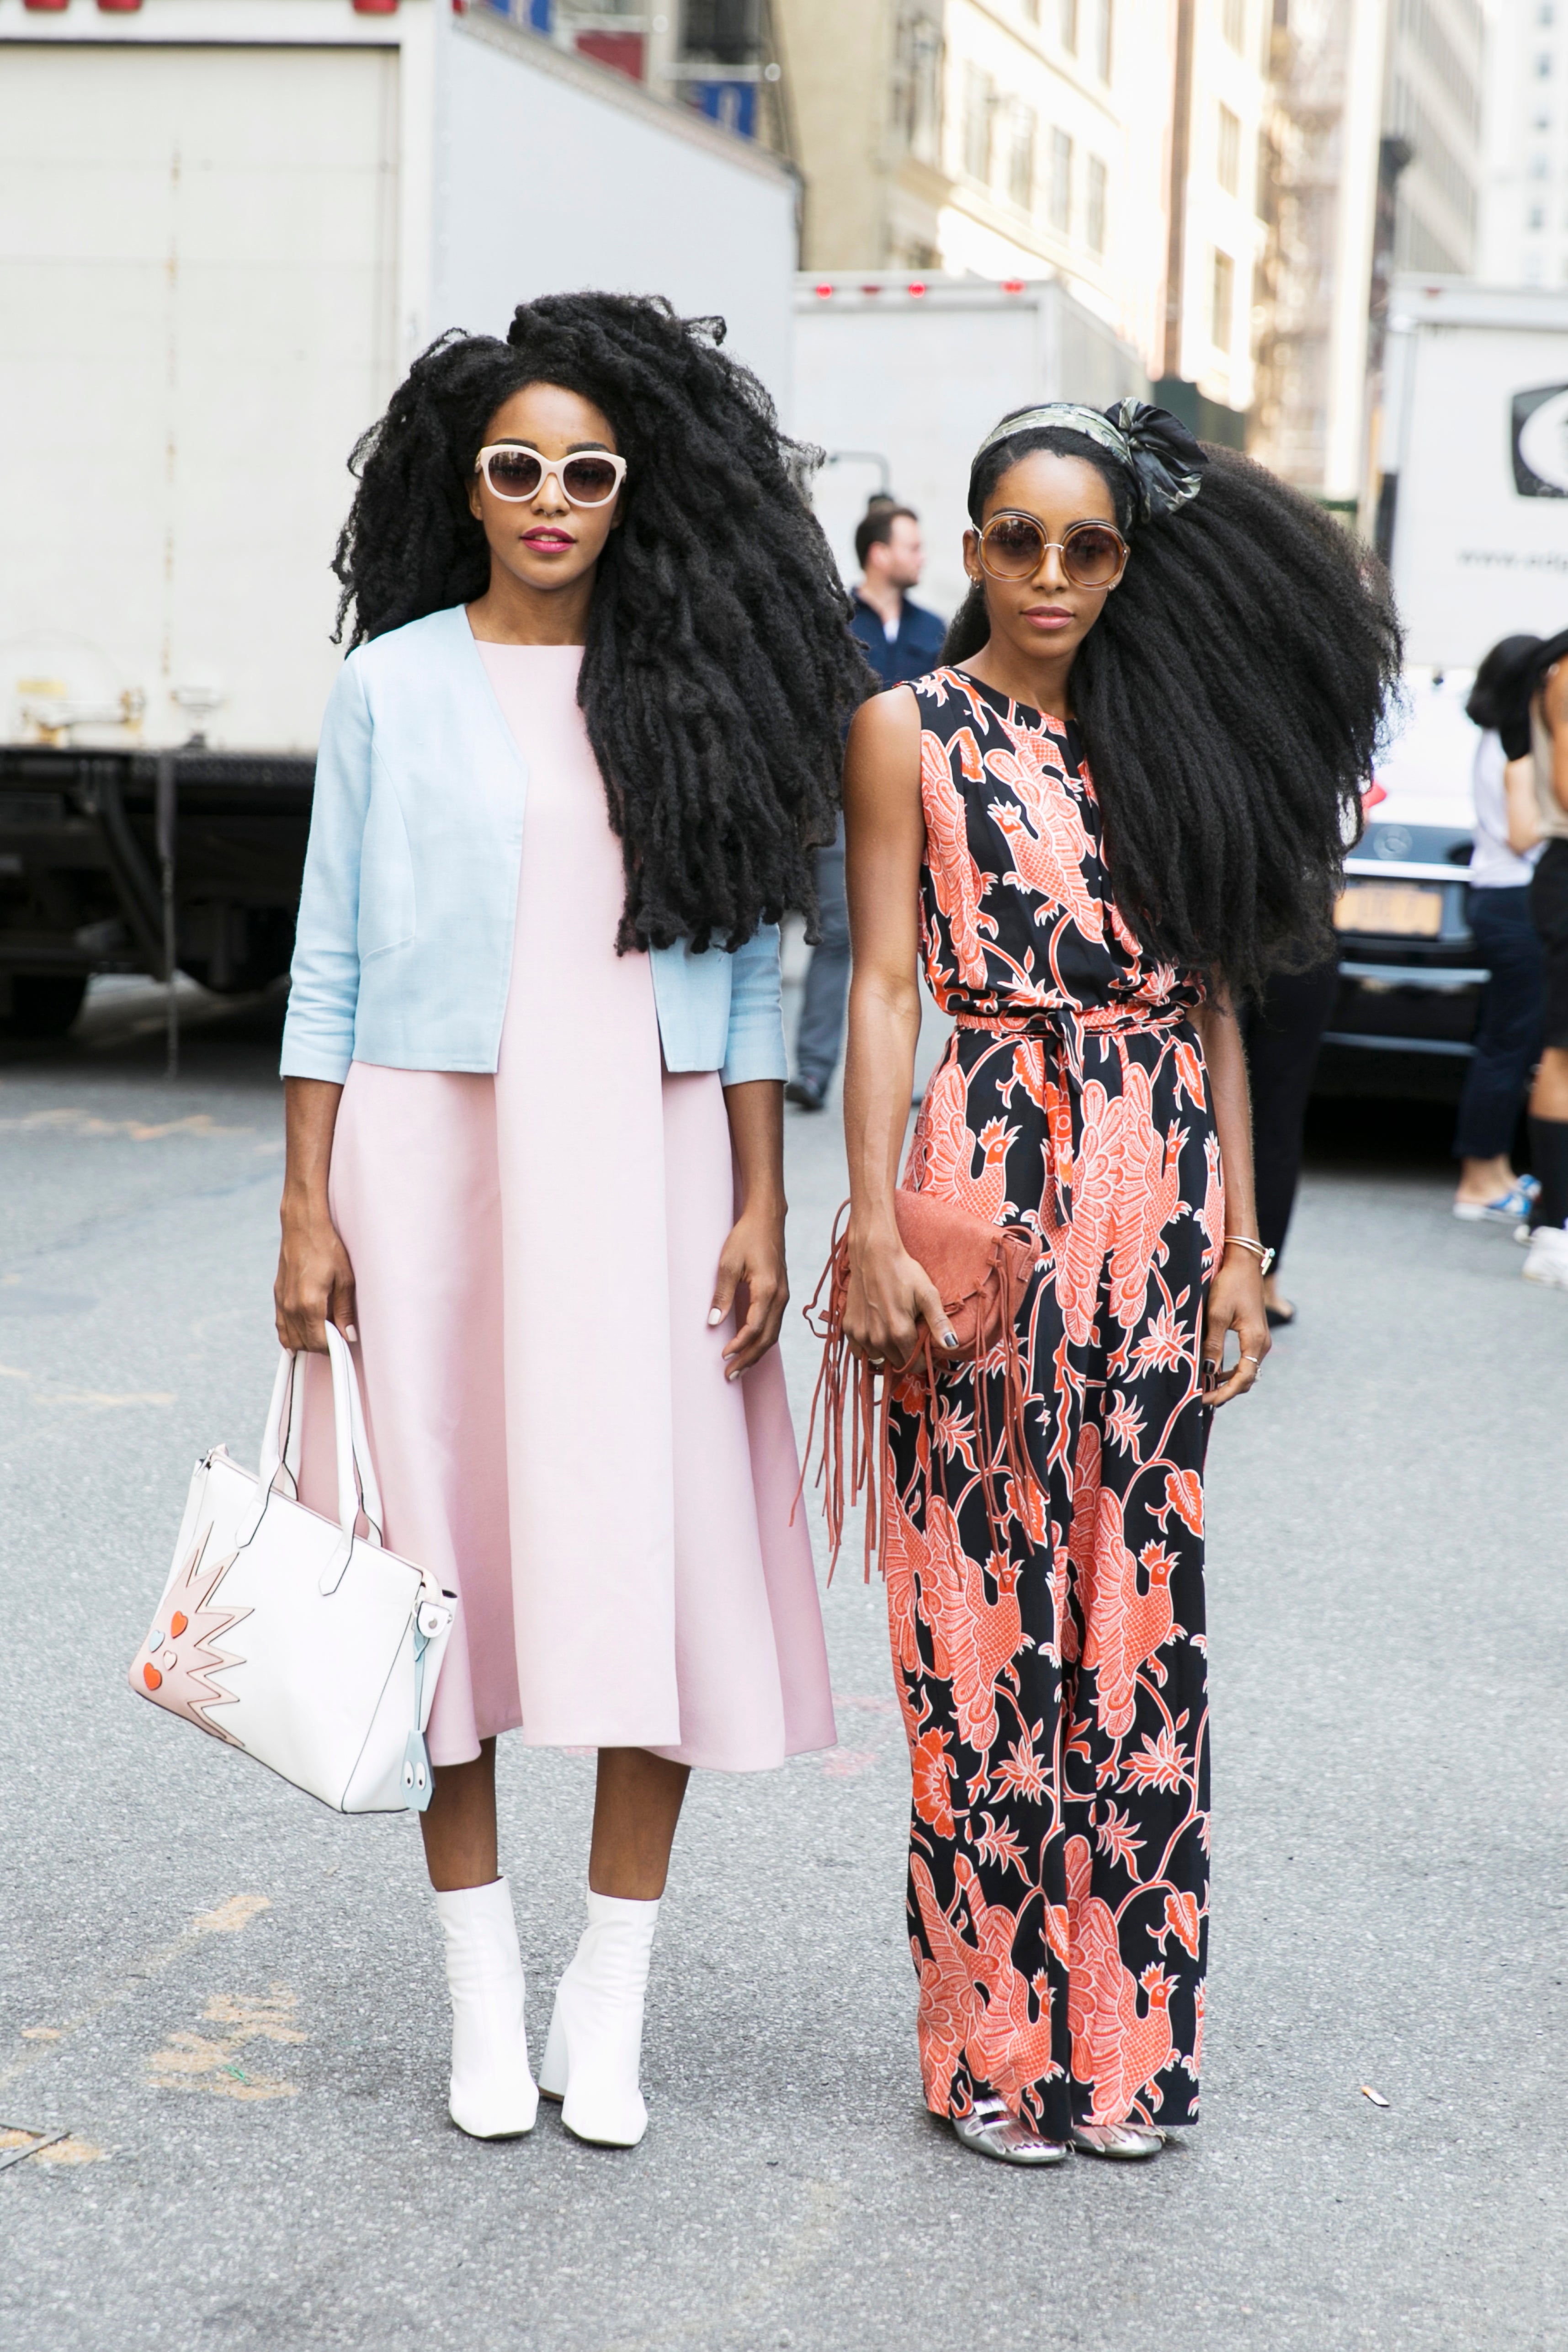 Black Girls Killing It at New York Fashion Week
